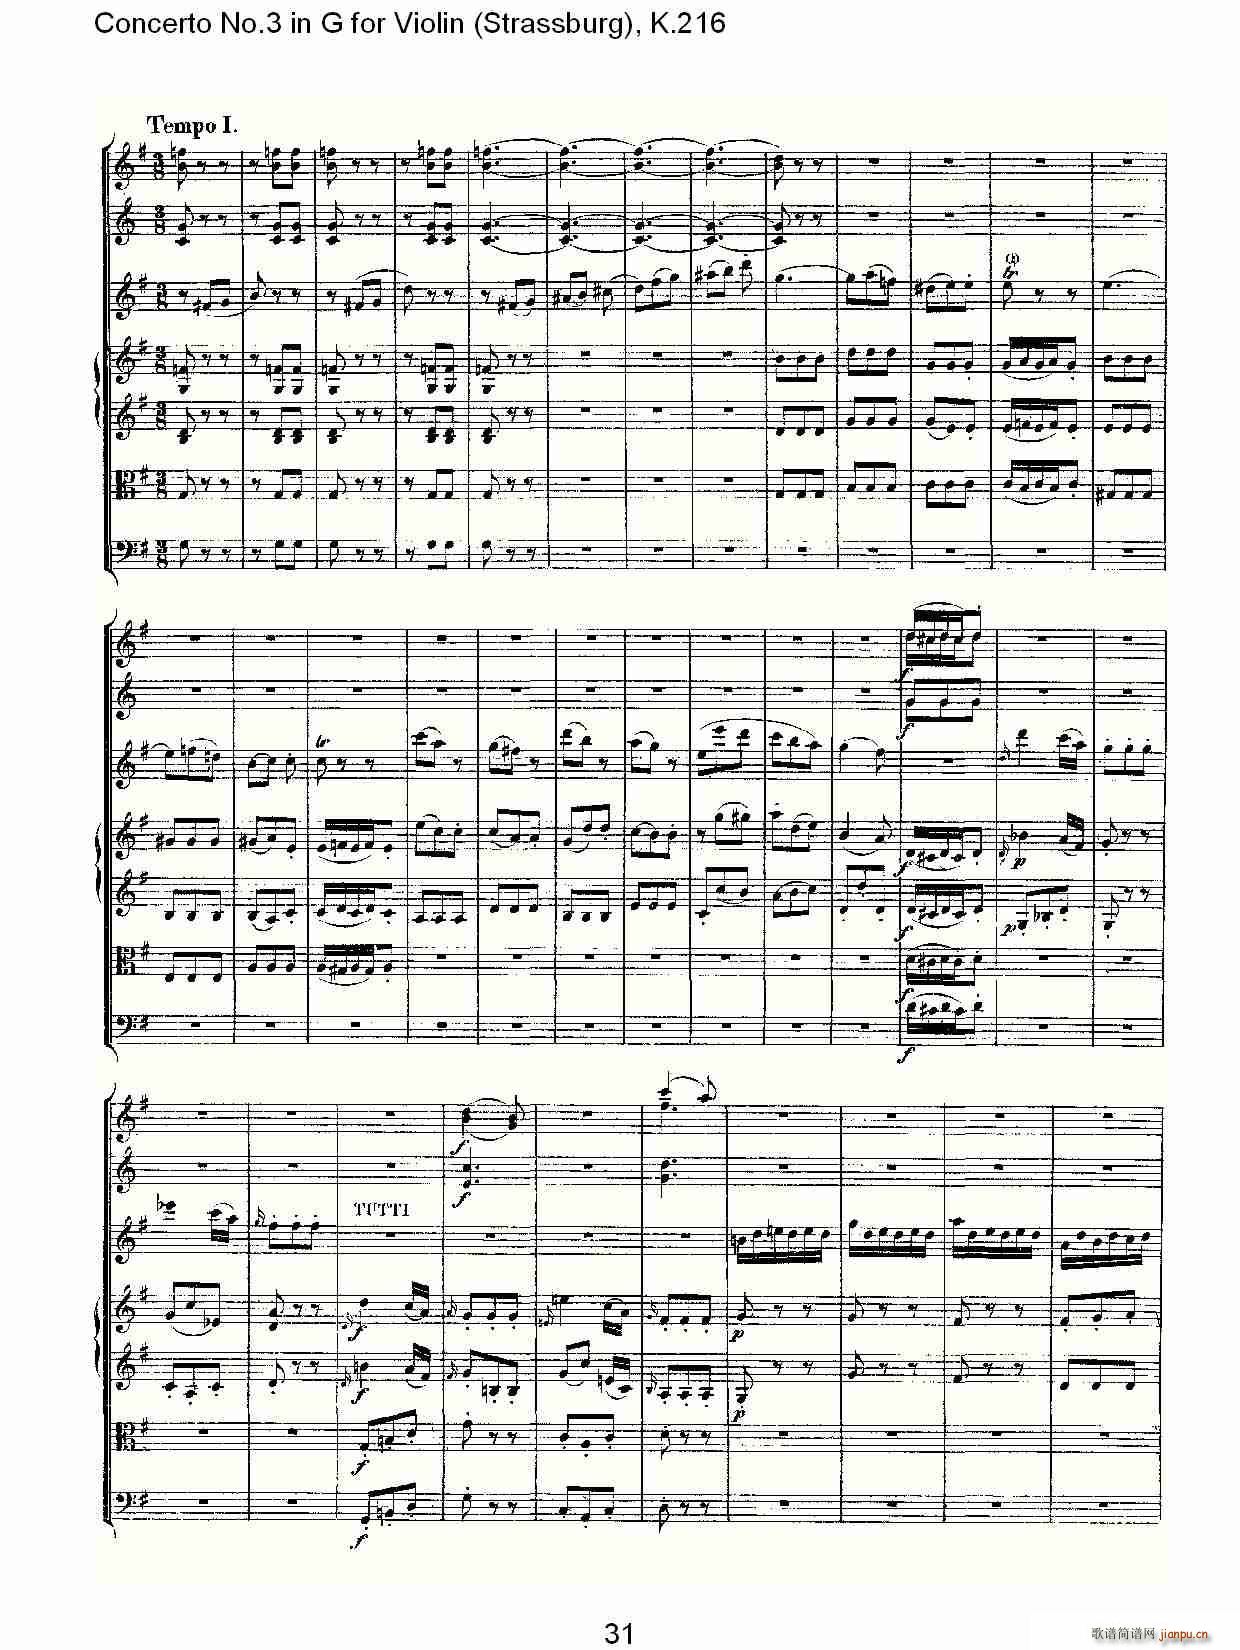 Concerto No.3 in G for Violin K.216(С)31